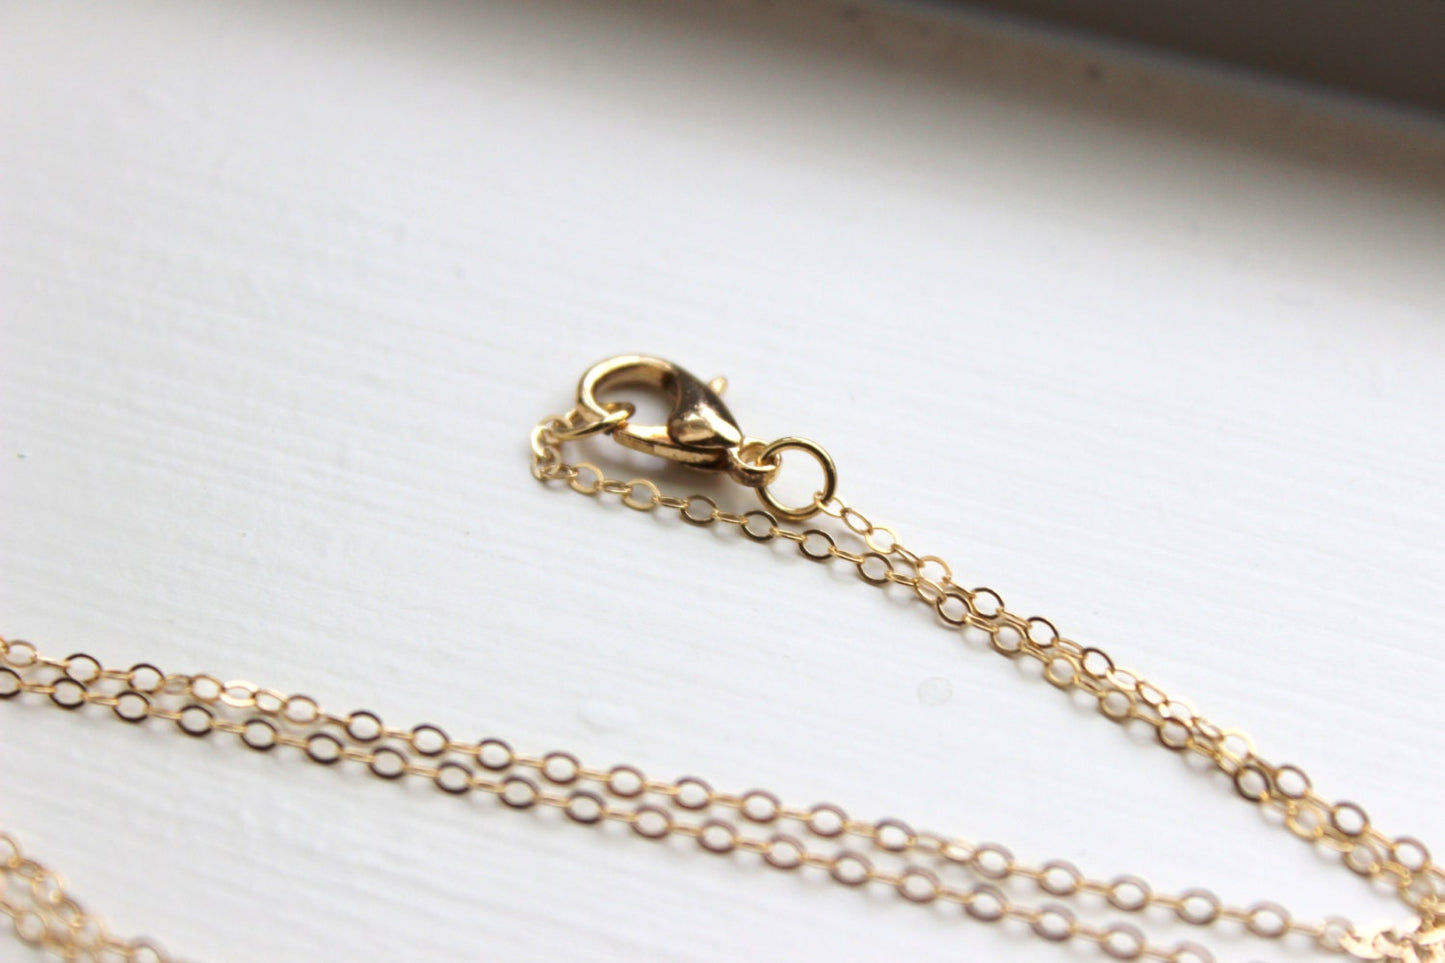 Dainty Aquamarine Blue Necklace Gold Filled Chain - Charm Necklace Aqua Bridesmaid Necklace - Aquamarine Wedding Jewelry - Gift under 25